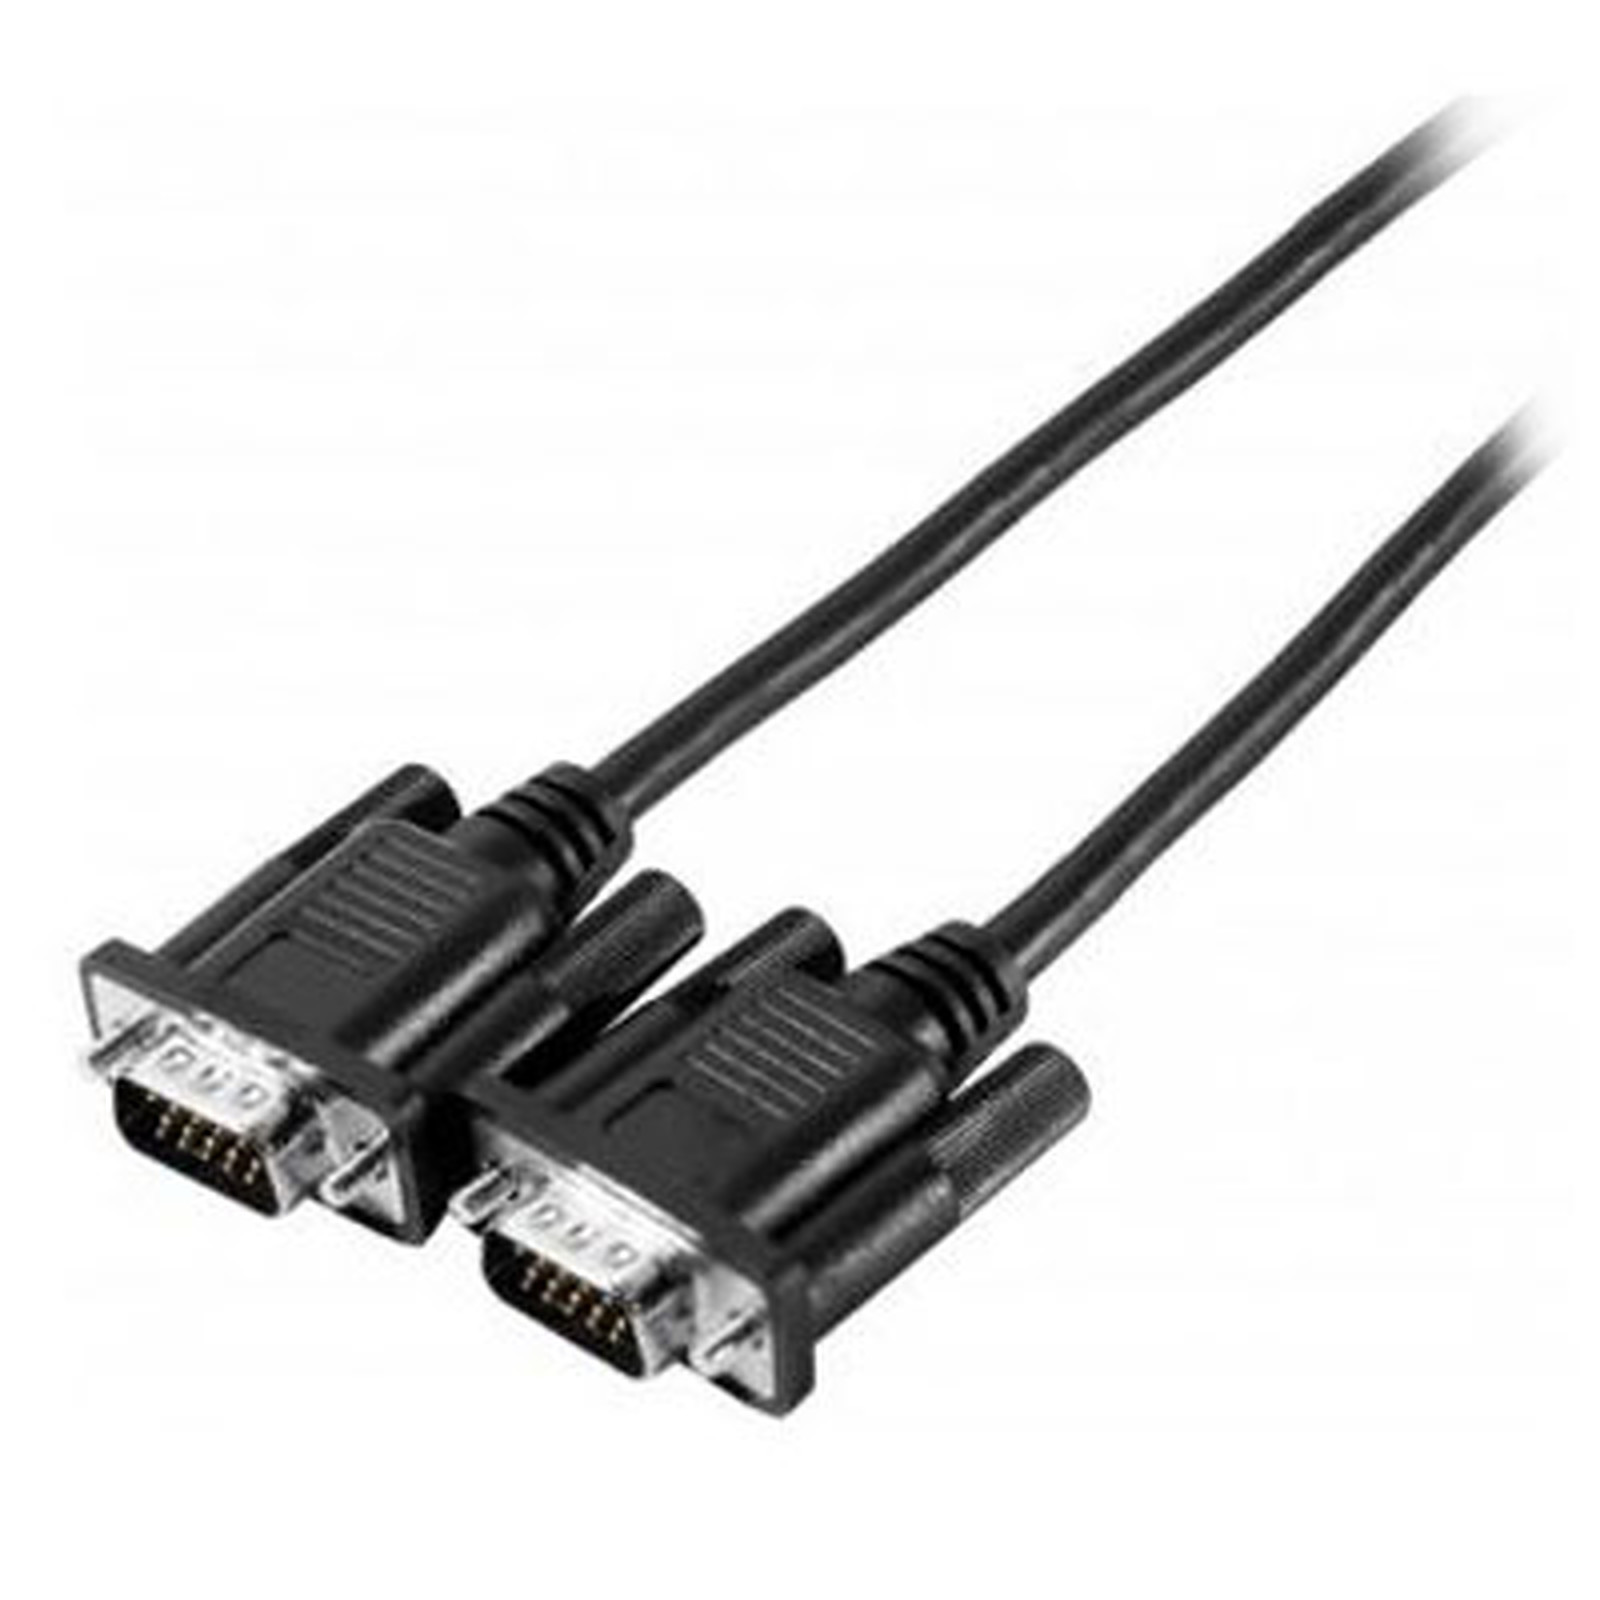 Cable VGA male / male (20 mètres) - VGA Generique